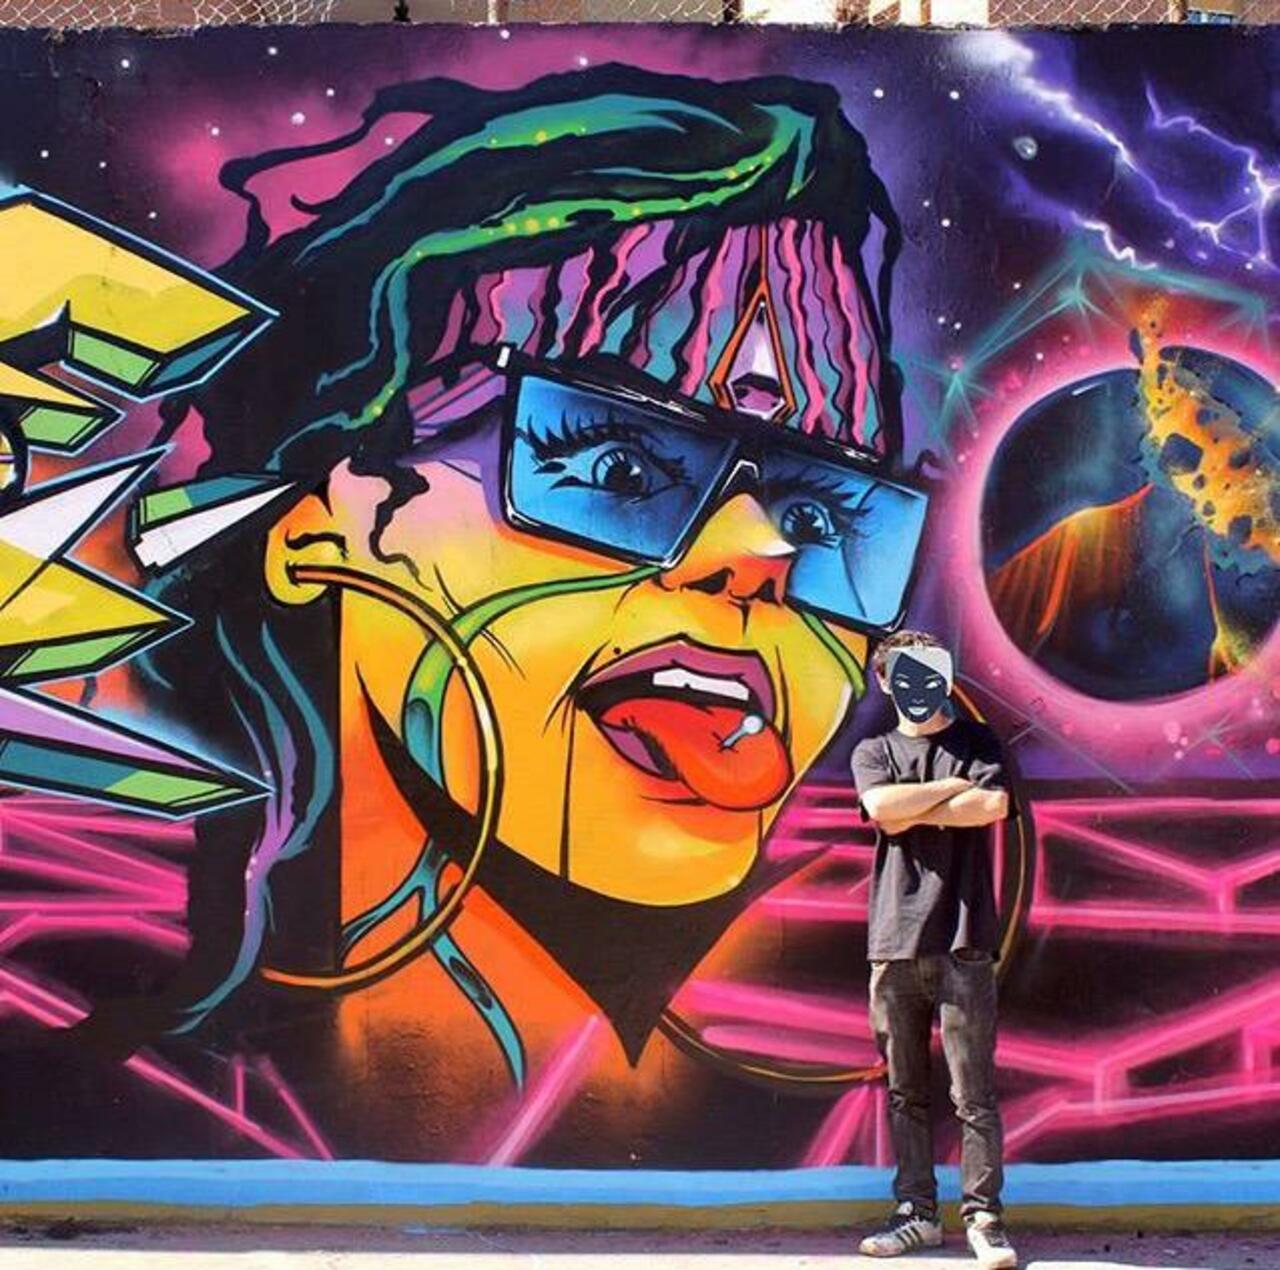 Brilliant new Street Art by the artist Jaycaes

#art #graffiti #mural #streetart http://t.co/d3Jm82jIDU